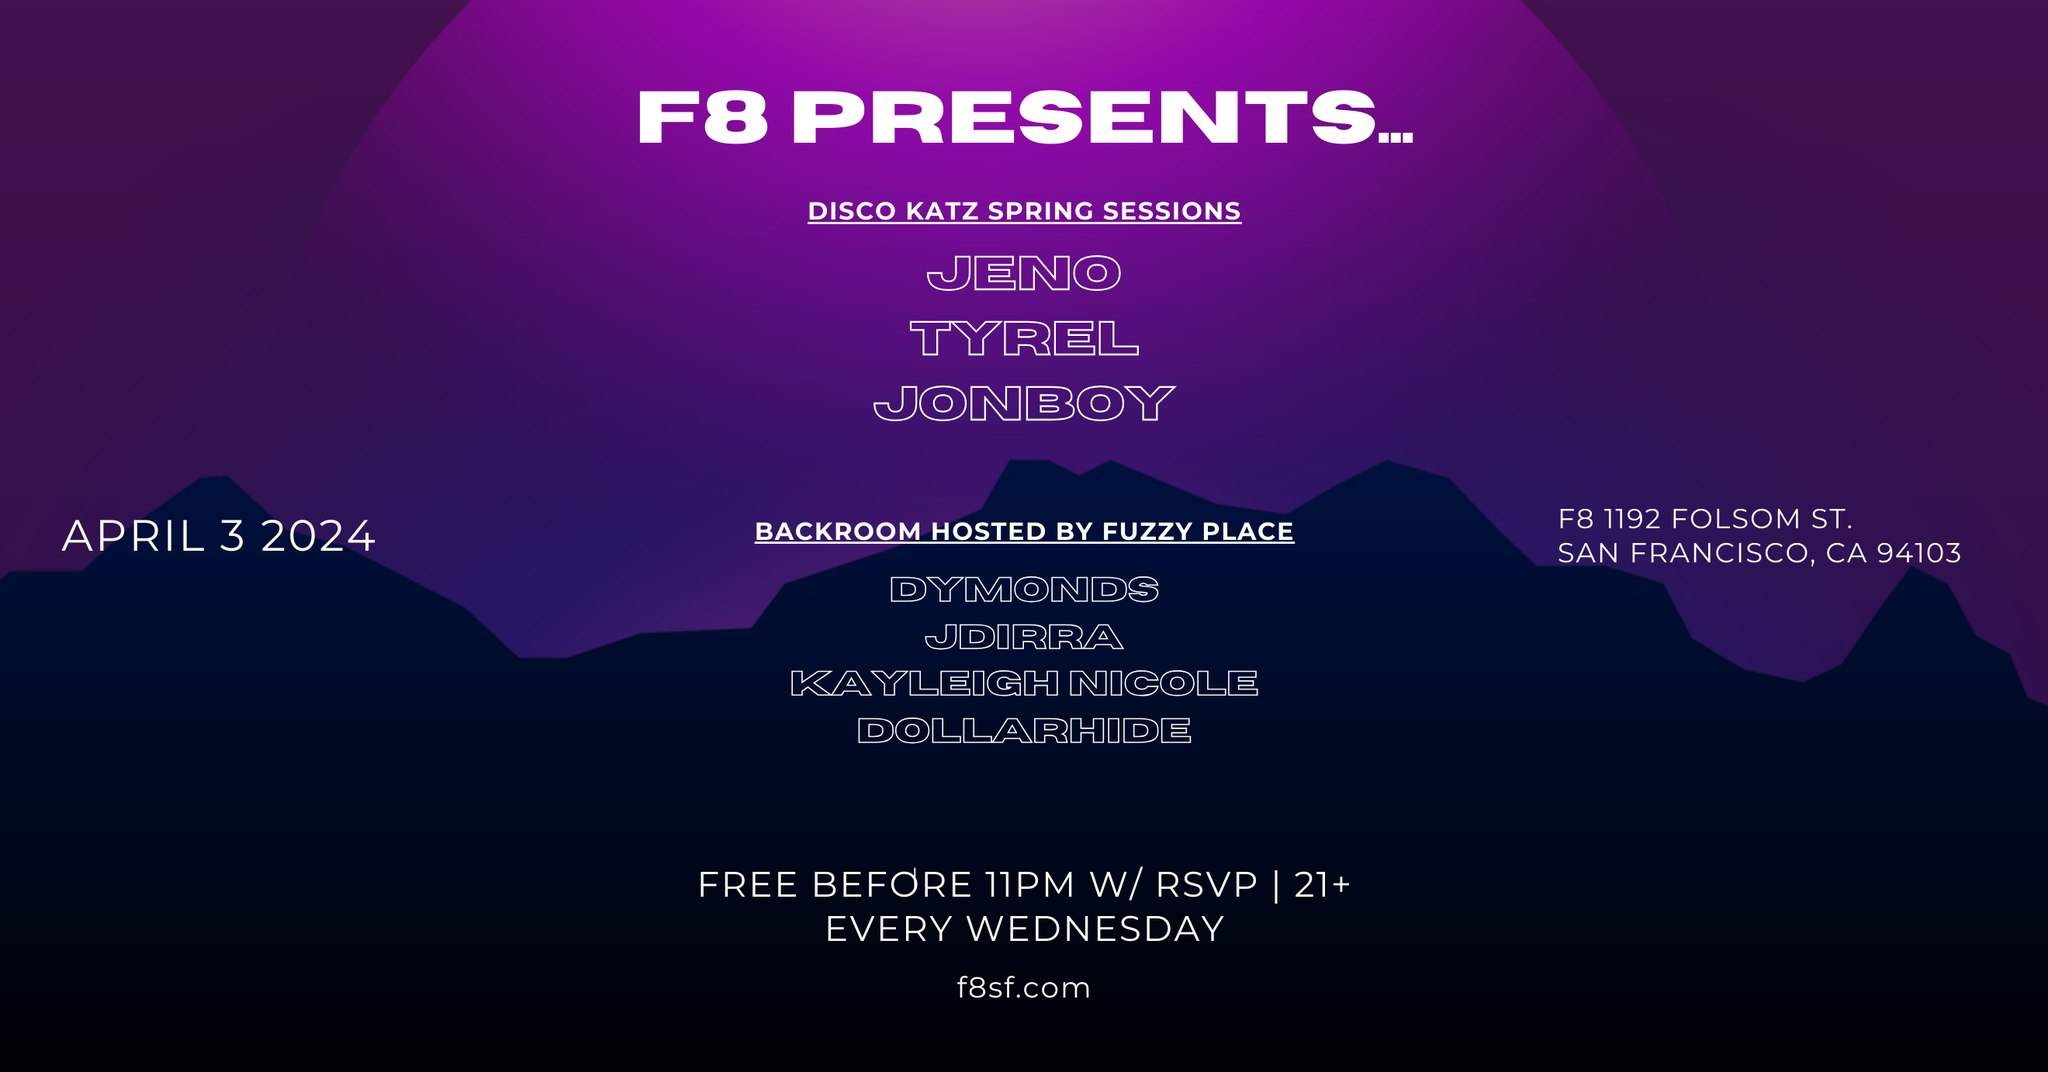 F8 Presents Disco Katz Spring Sessions feat. Jeno - フライヤー表